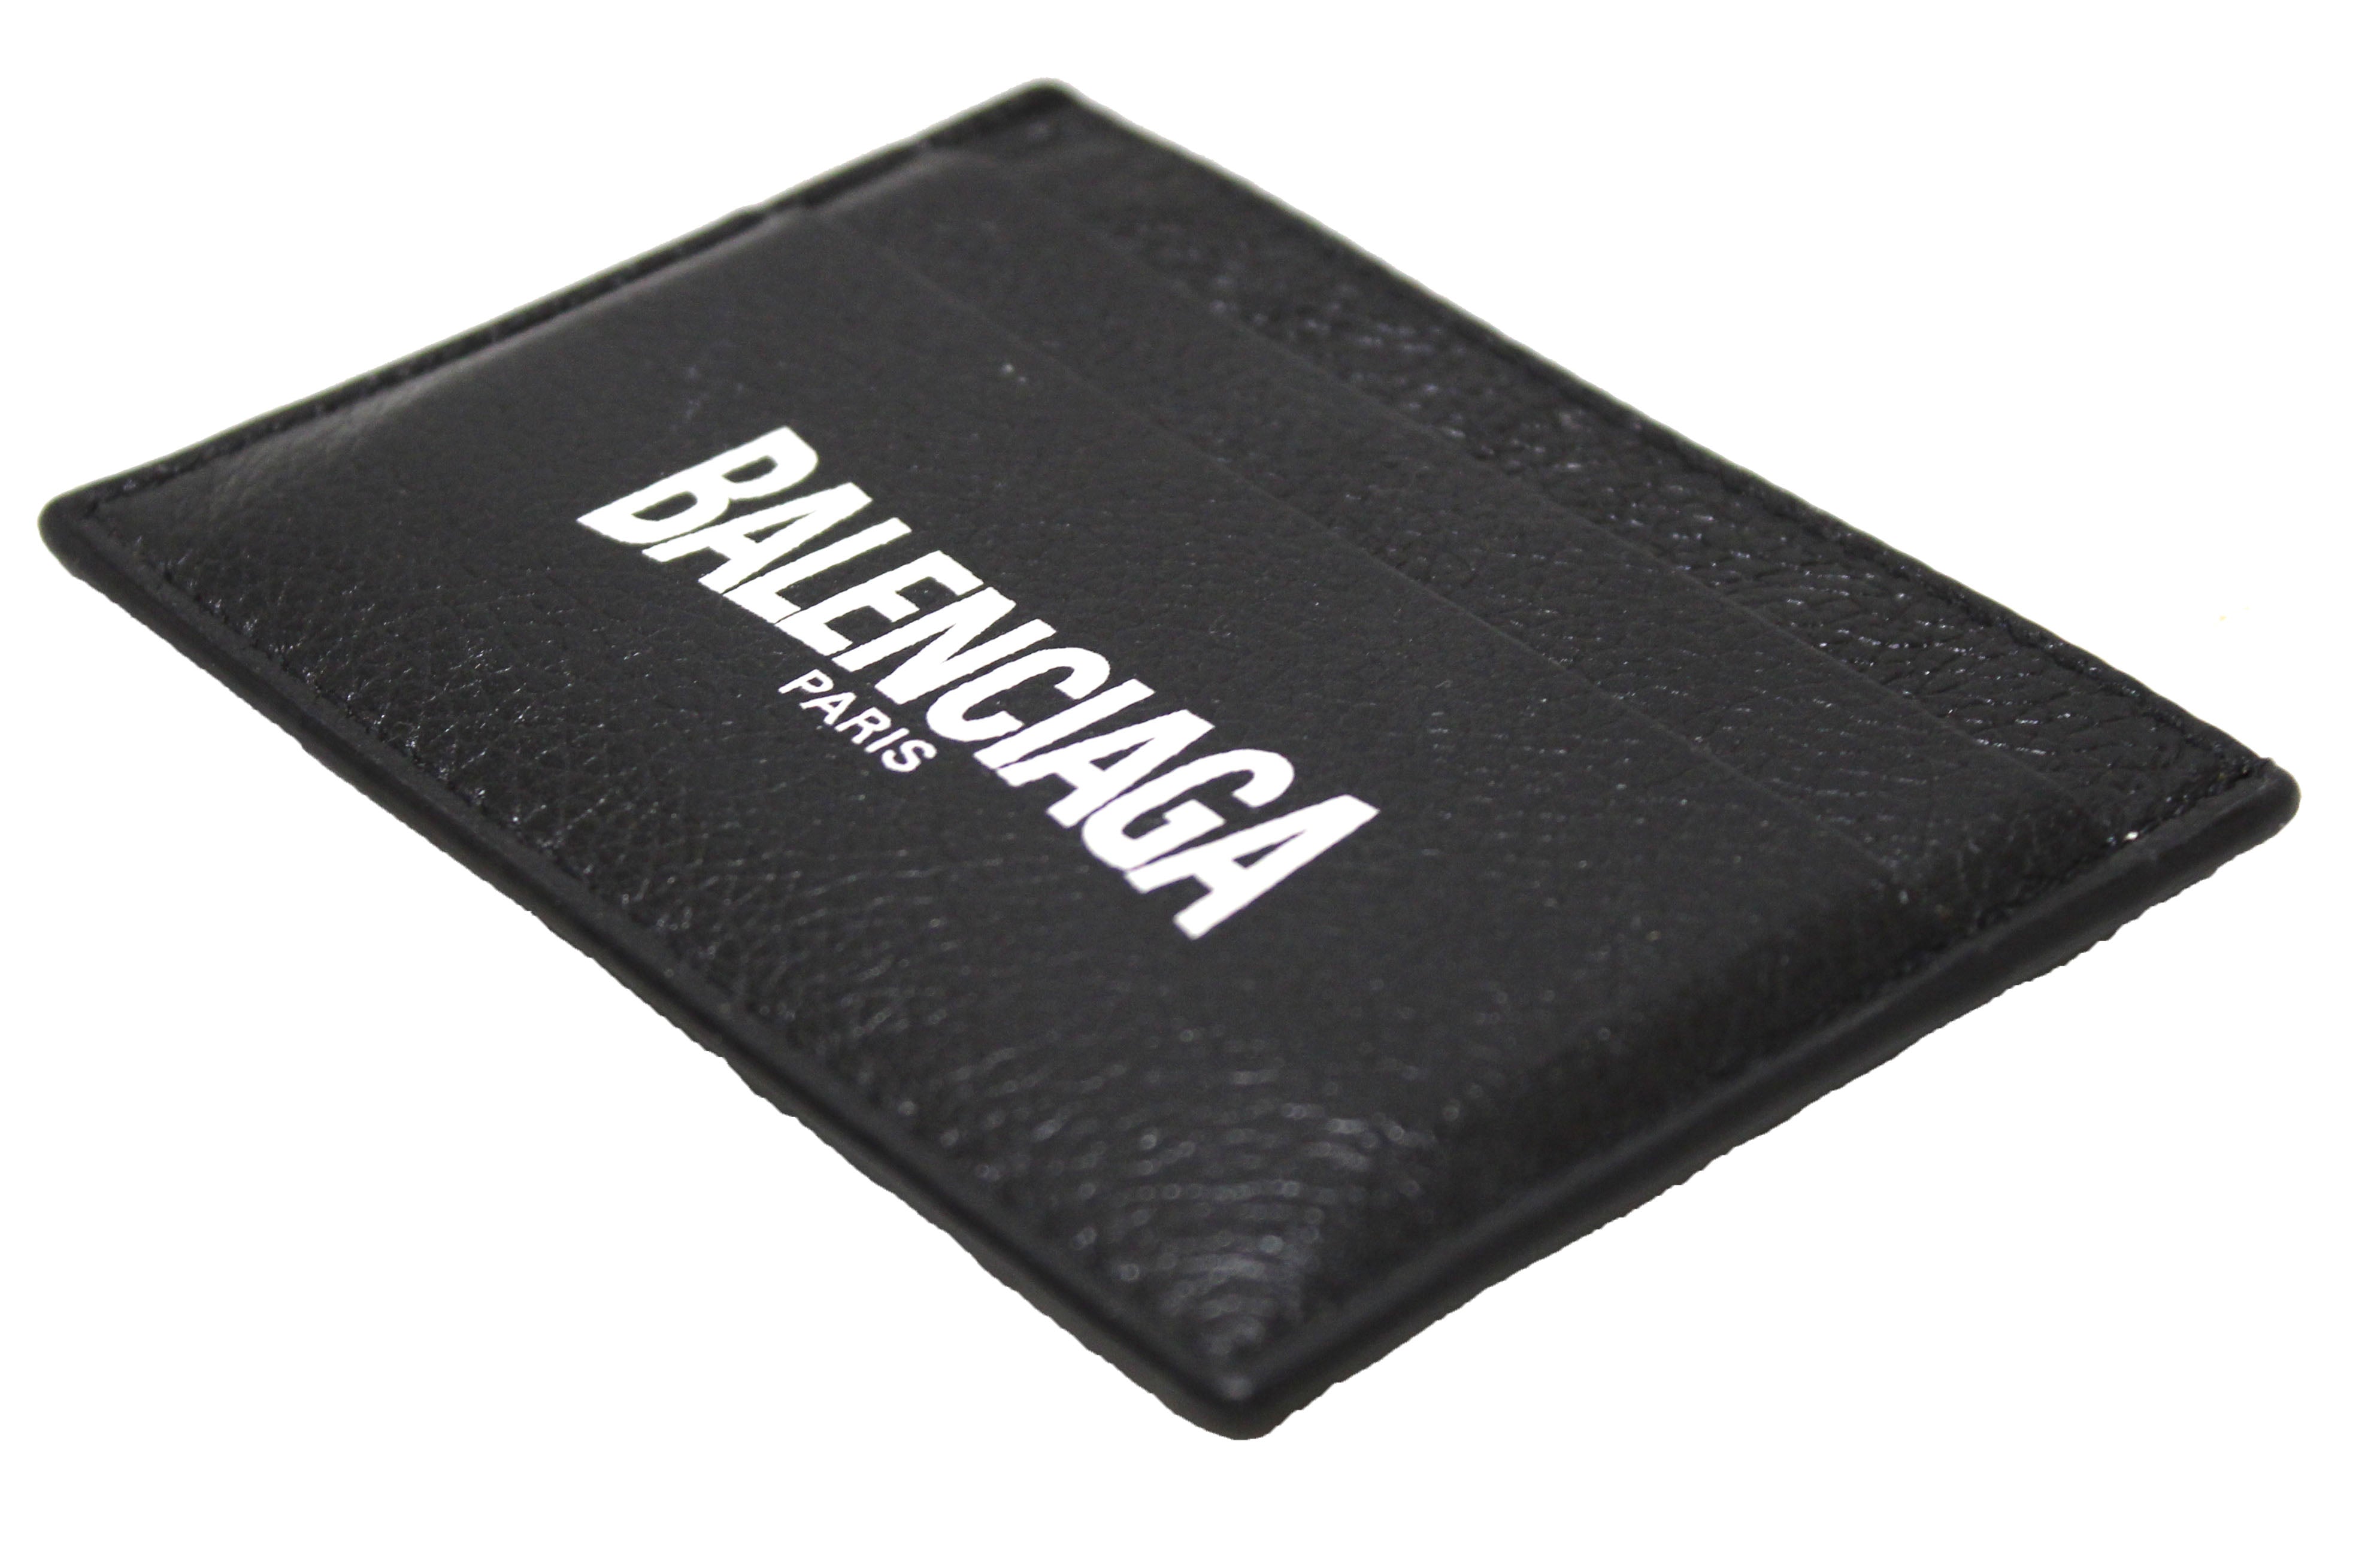 NEW Authentic Balenciaga Black Small Grain Calfskin Leather Cash Card Holder